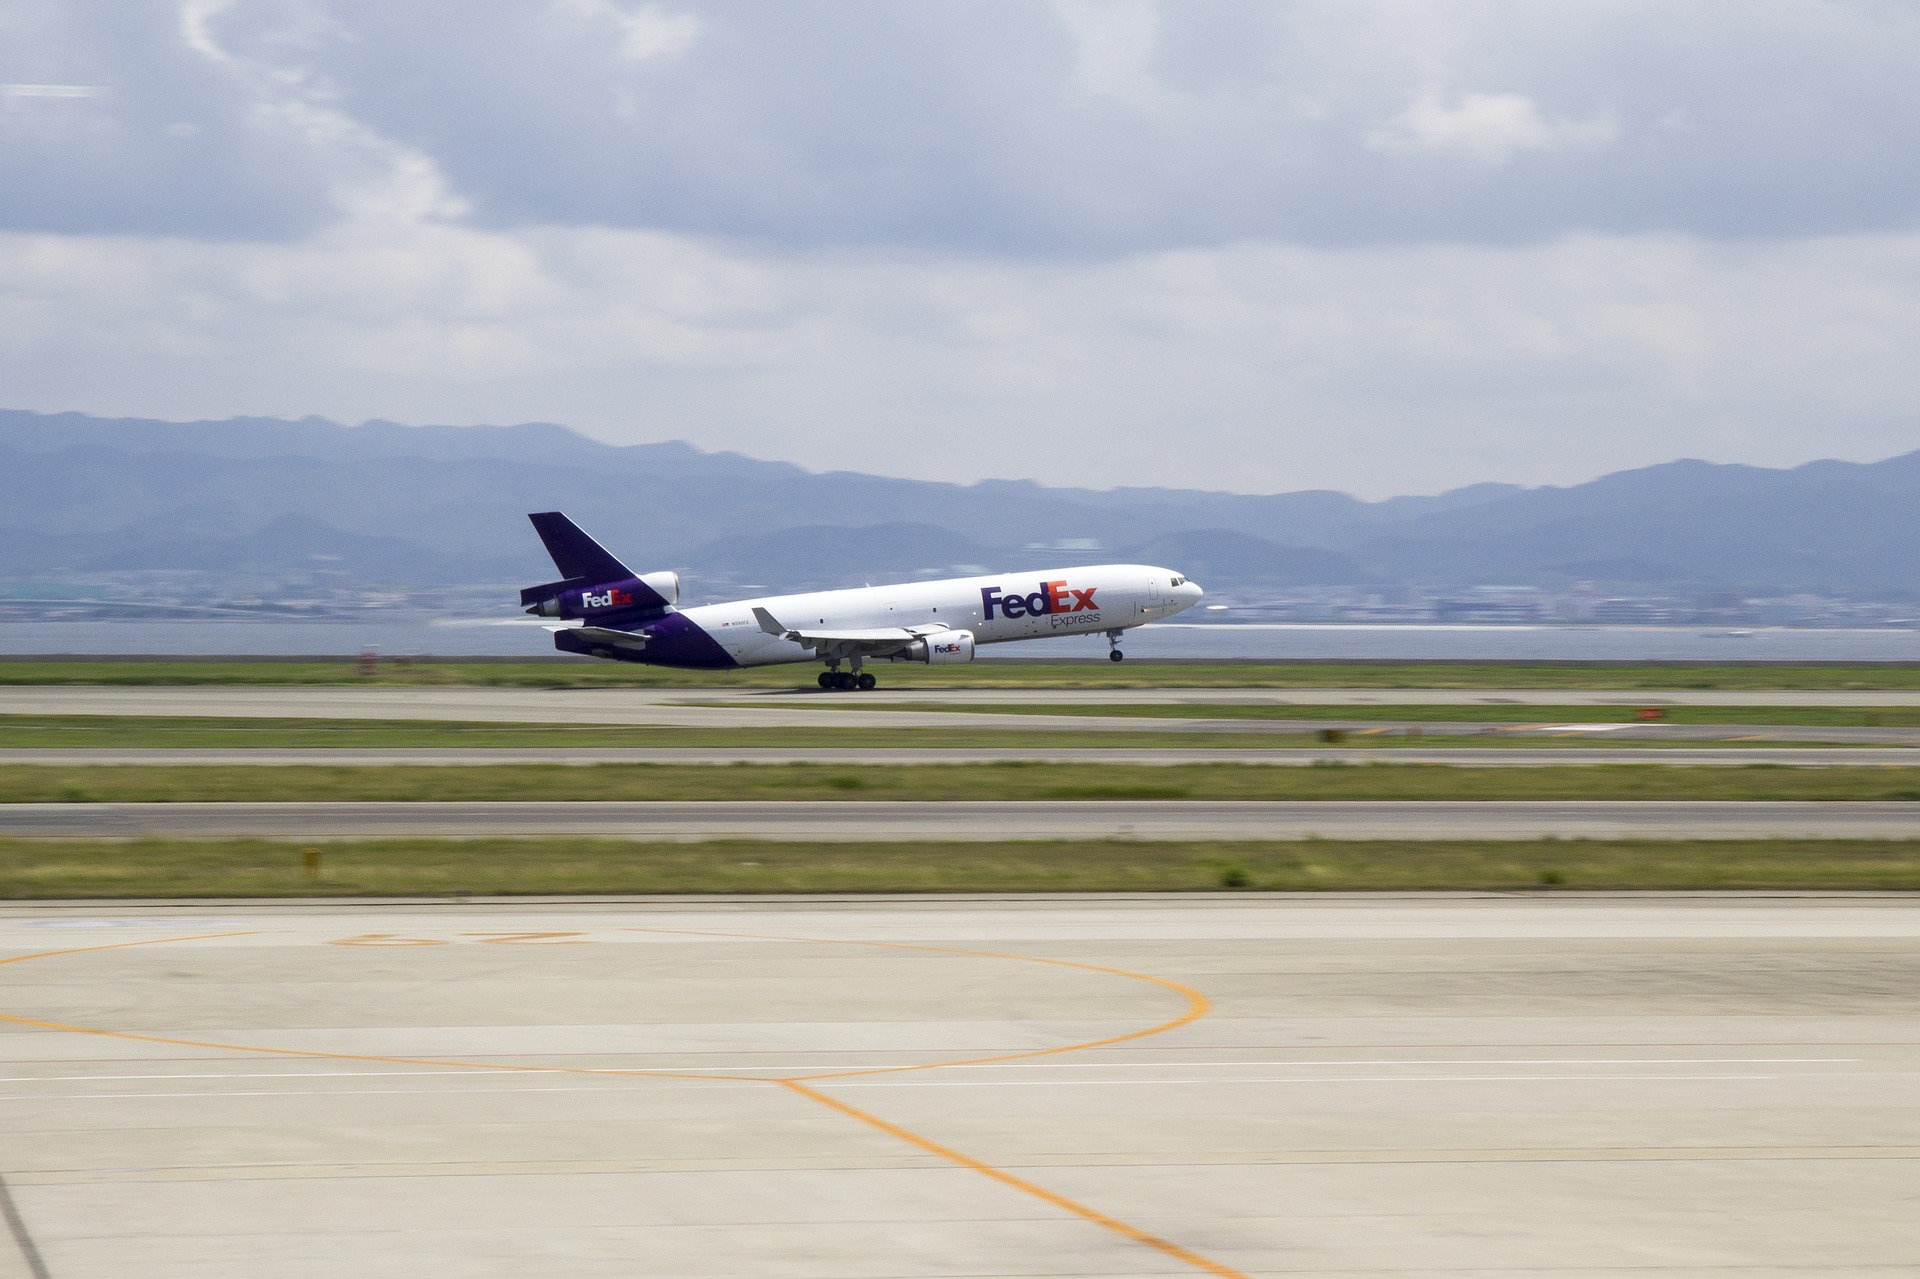 FedEx plan taking off on runway.